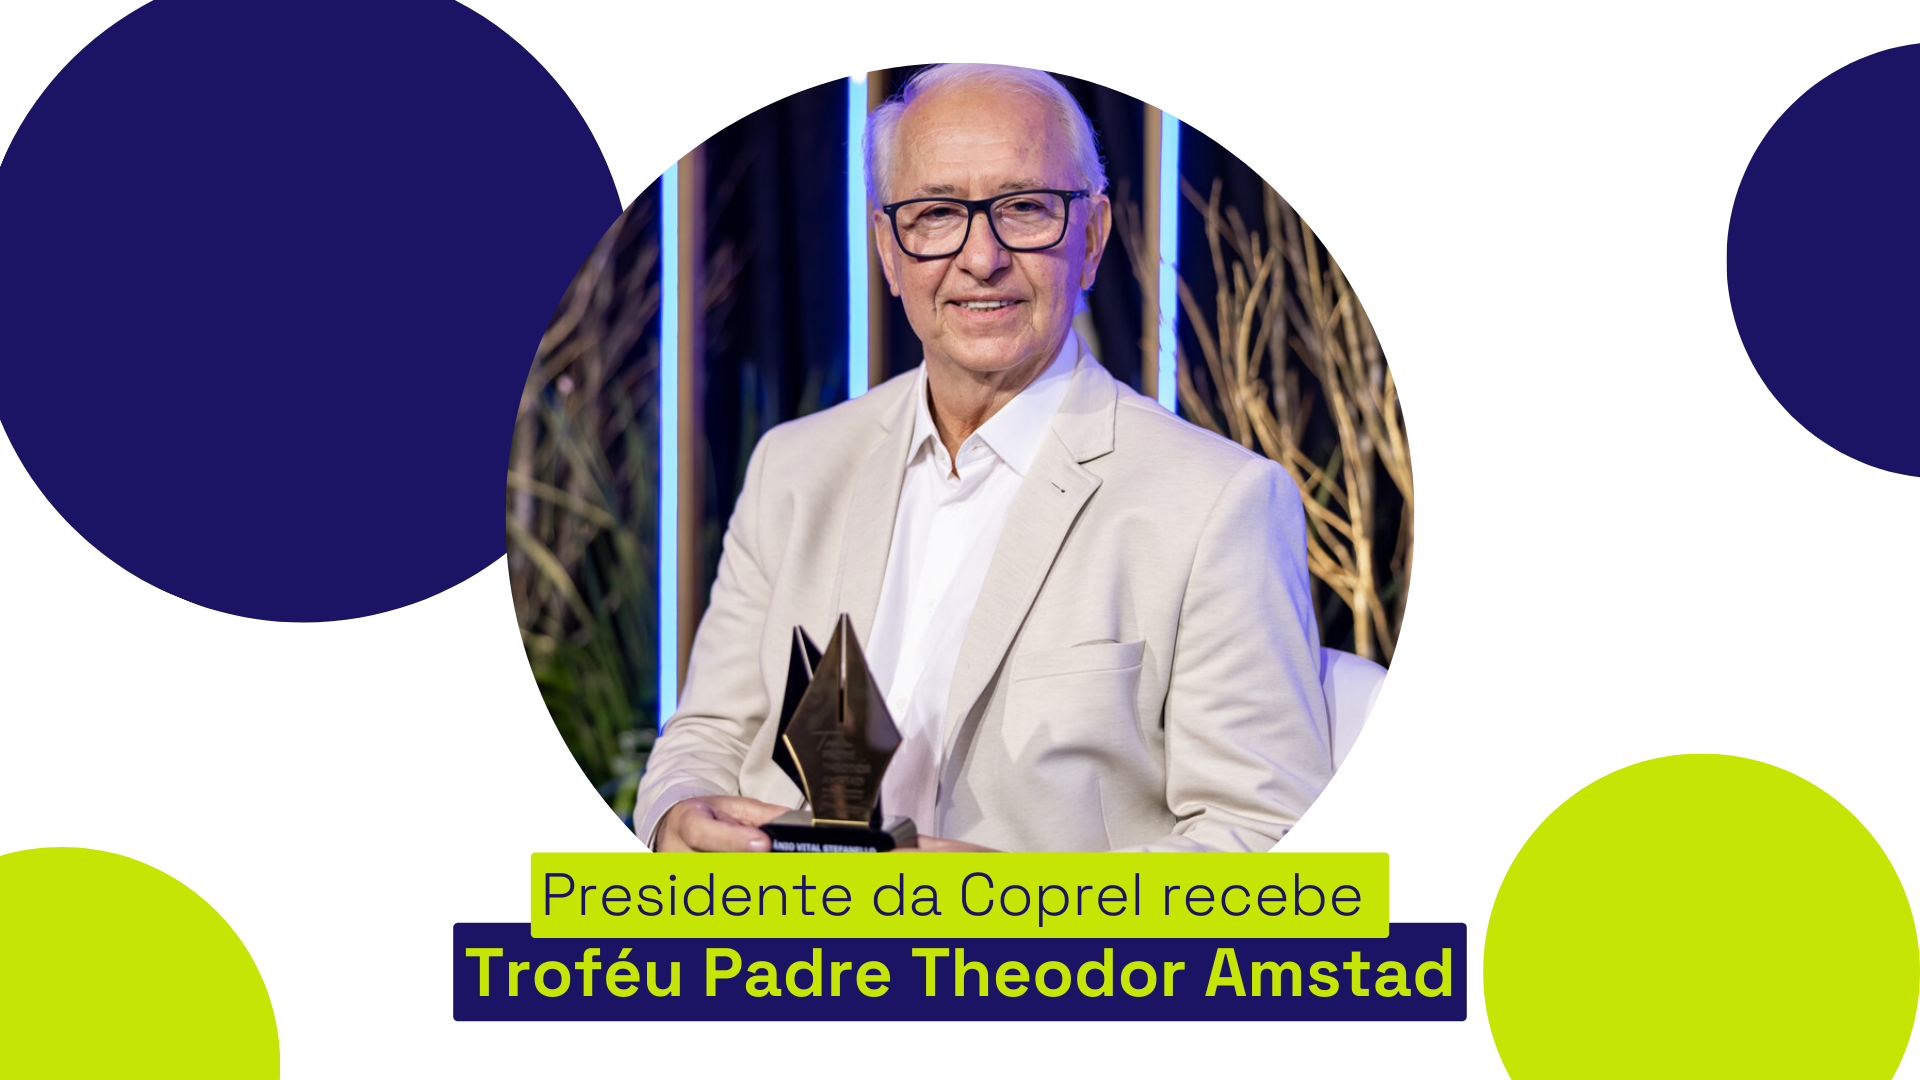  Presidente da Coprel recebe o Troféu Padre Theodor Amstad